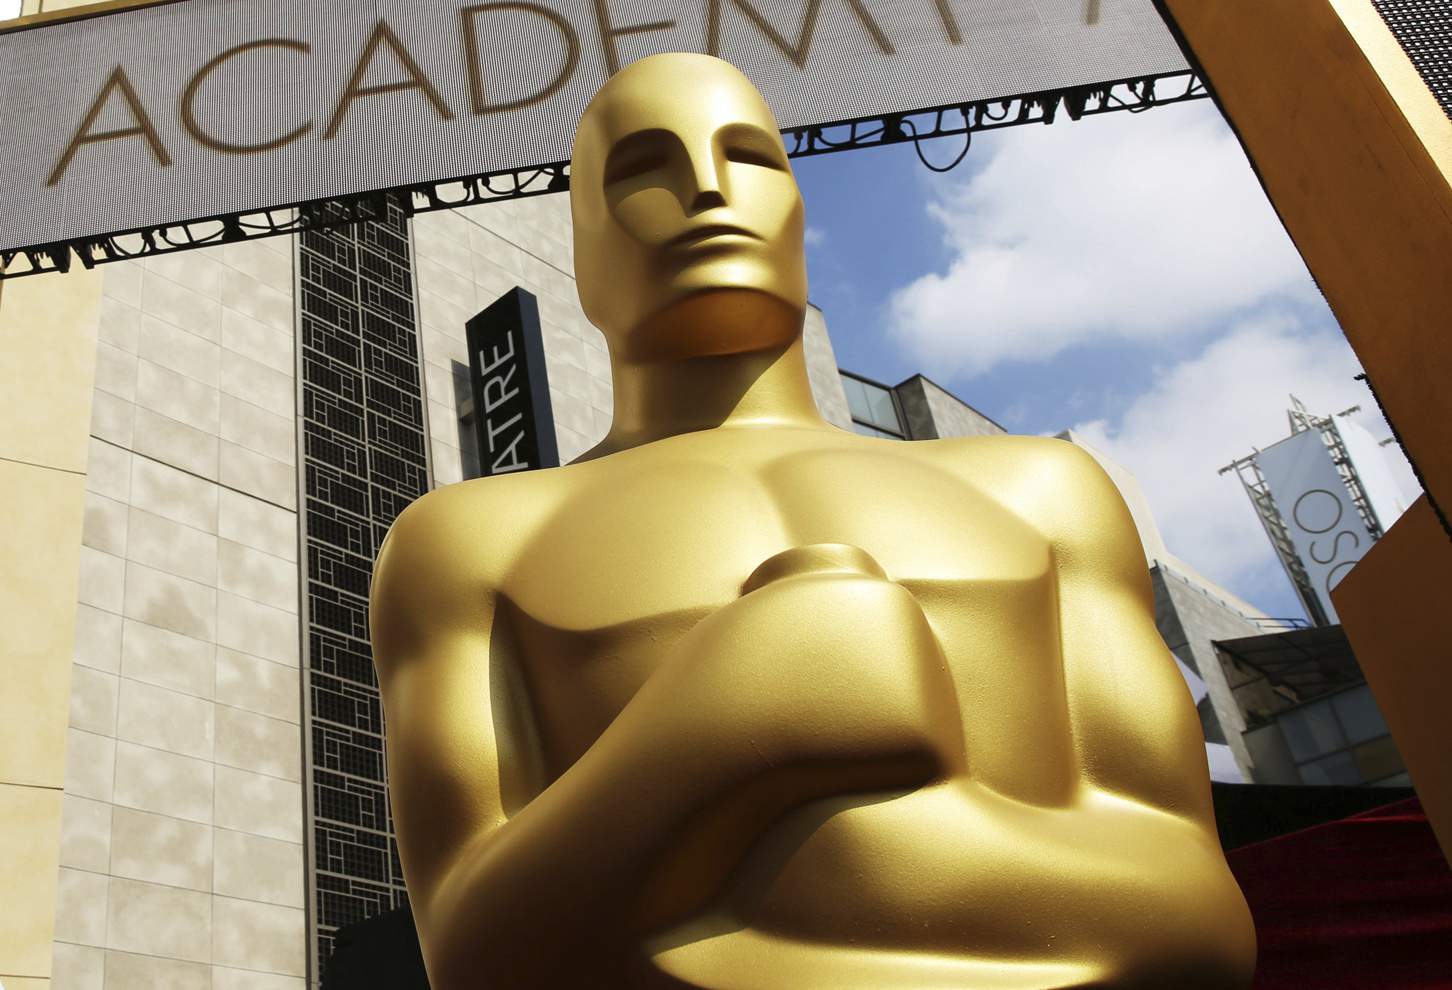 LIVE STREAM: Oscar nominations announced for 93rd Academy Awards